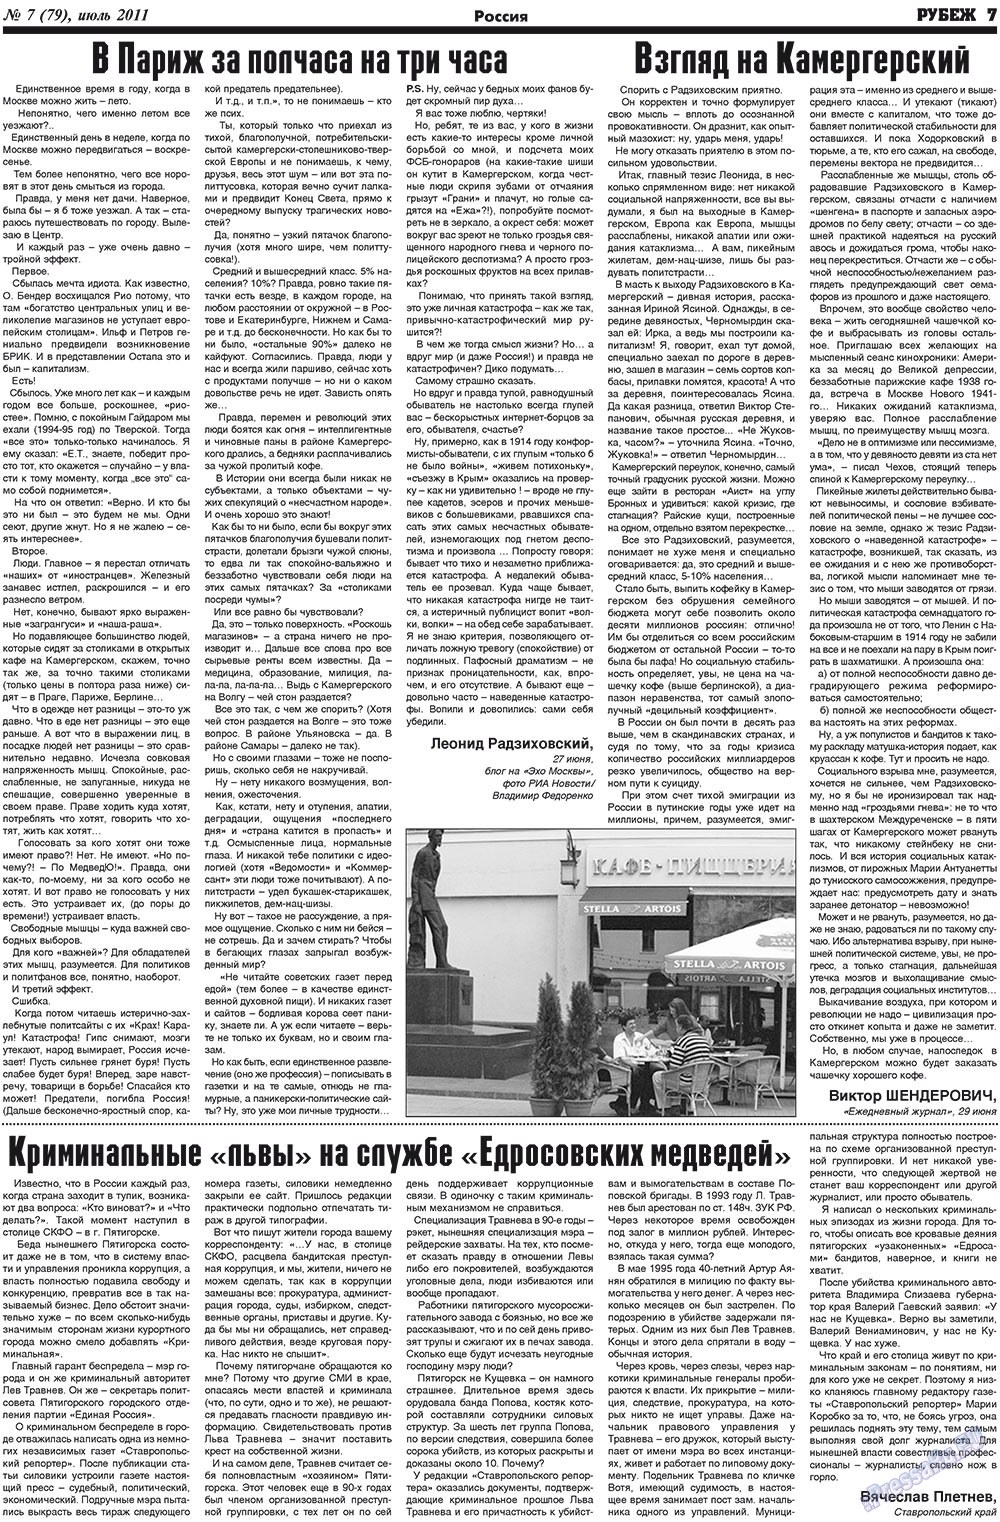 Рубеж, газета. 2011 №7 стр.7